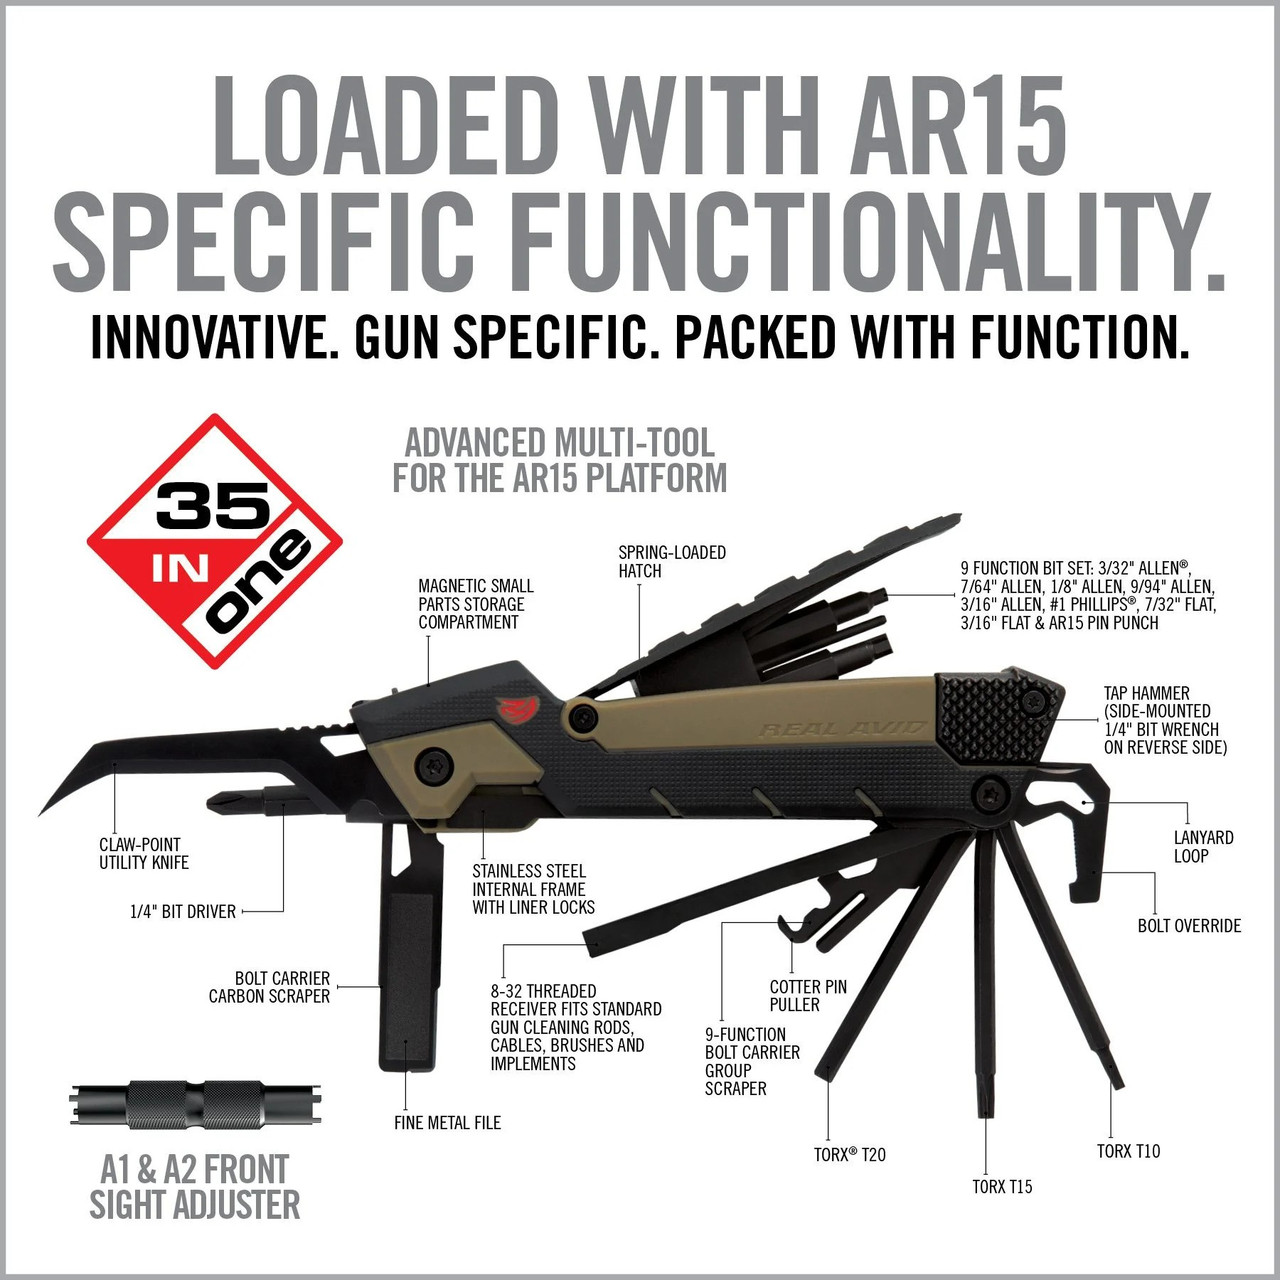 Real Avid Gun Tool Pro 35 in 1 Rifle Multi Tool